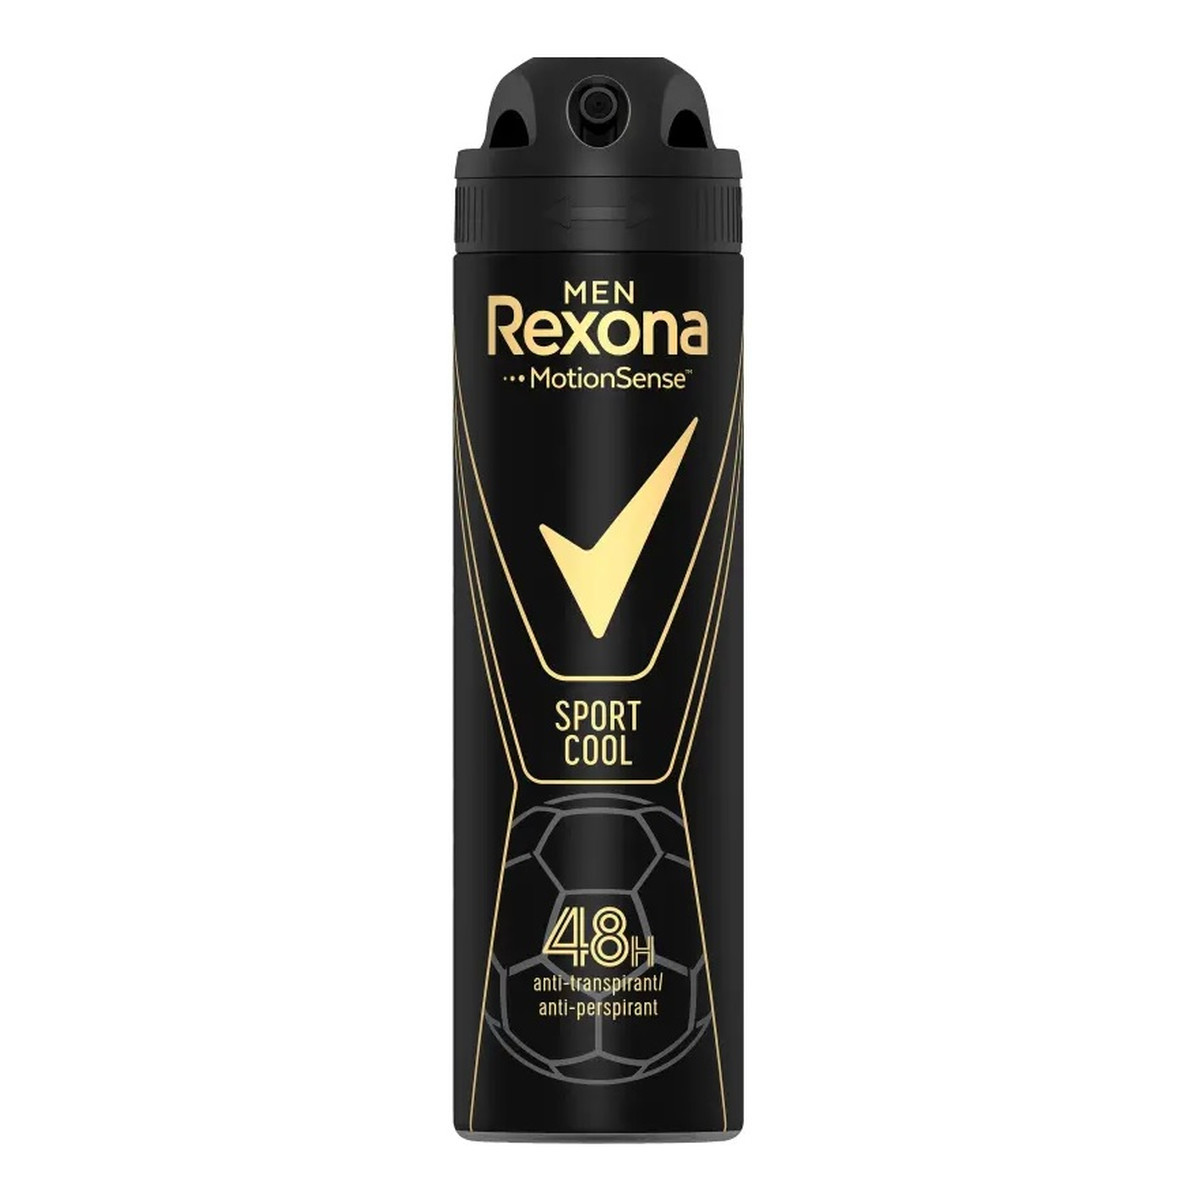 Rexona Men sport cool anti-perspirant 48h antyperspirant spray 150ml